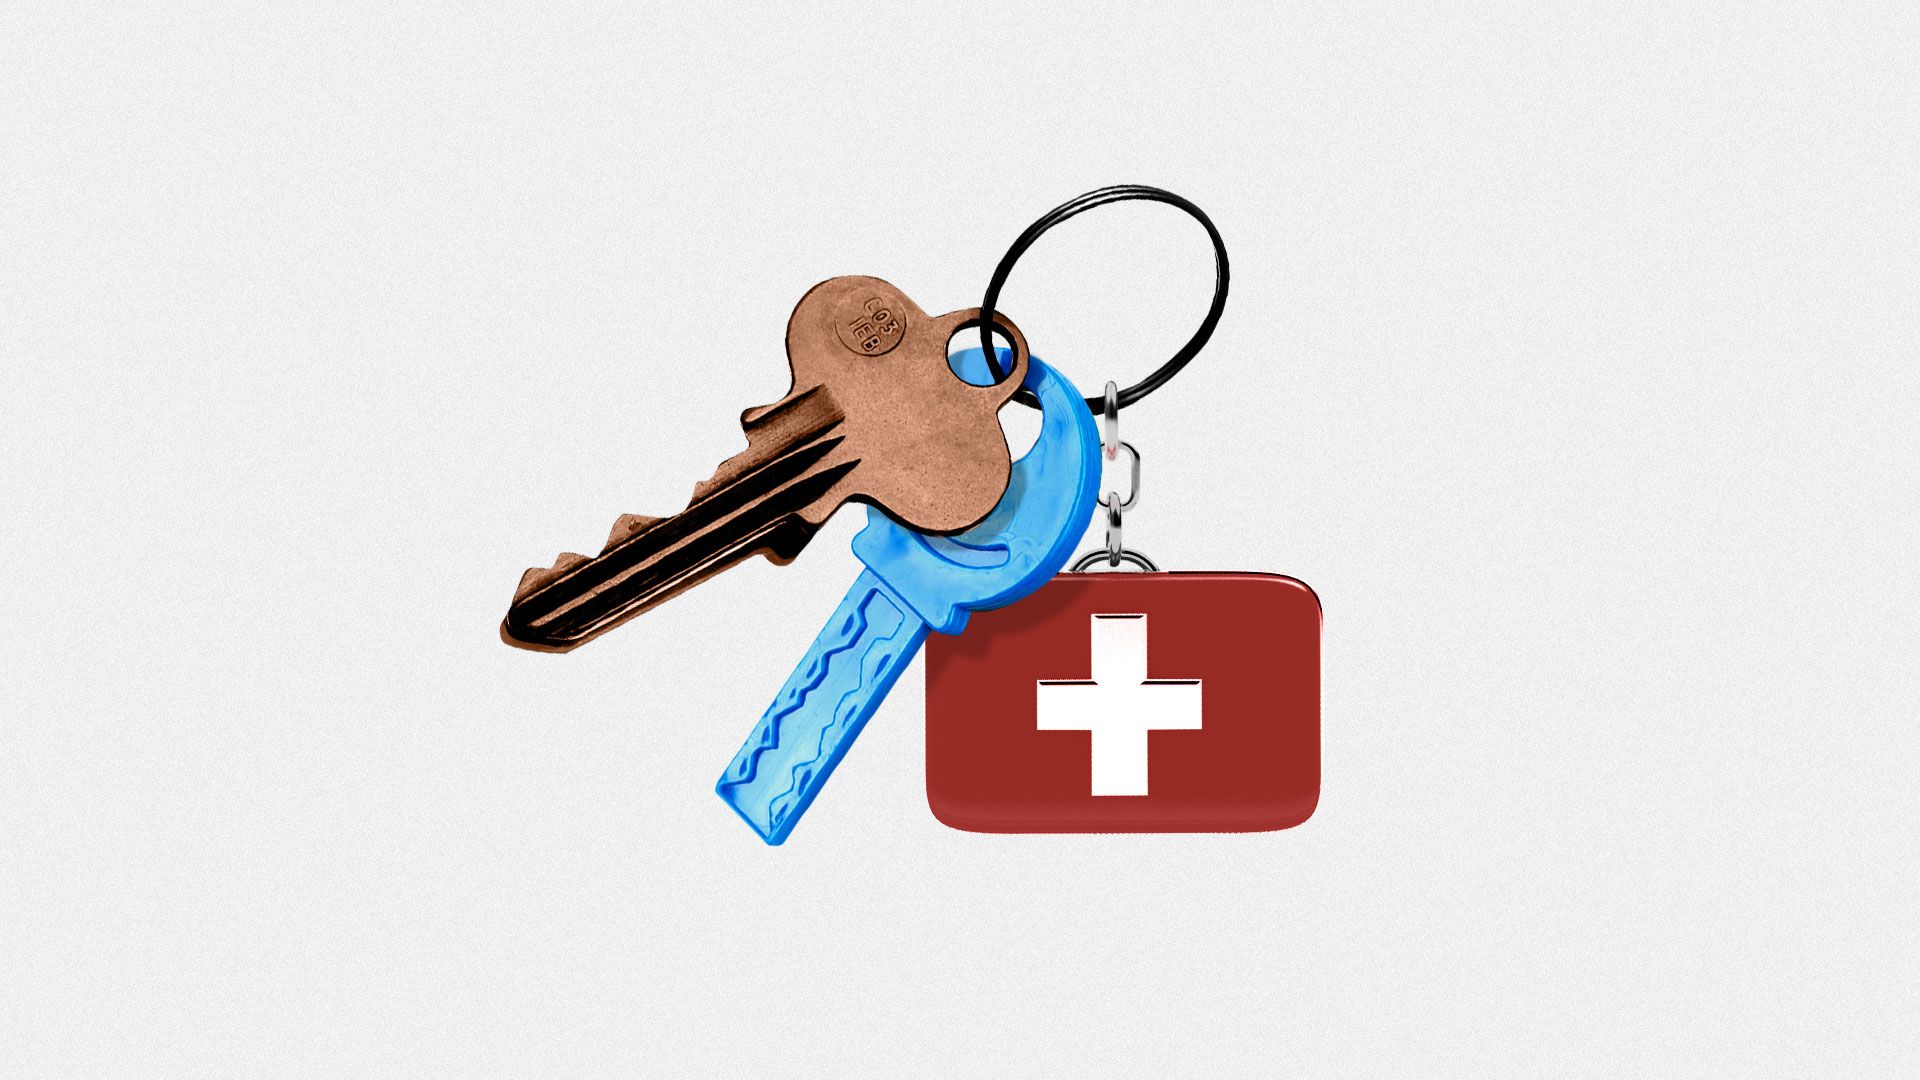 Illustration of keychain with regular key, child’s plastic key, and medical bag.